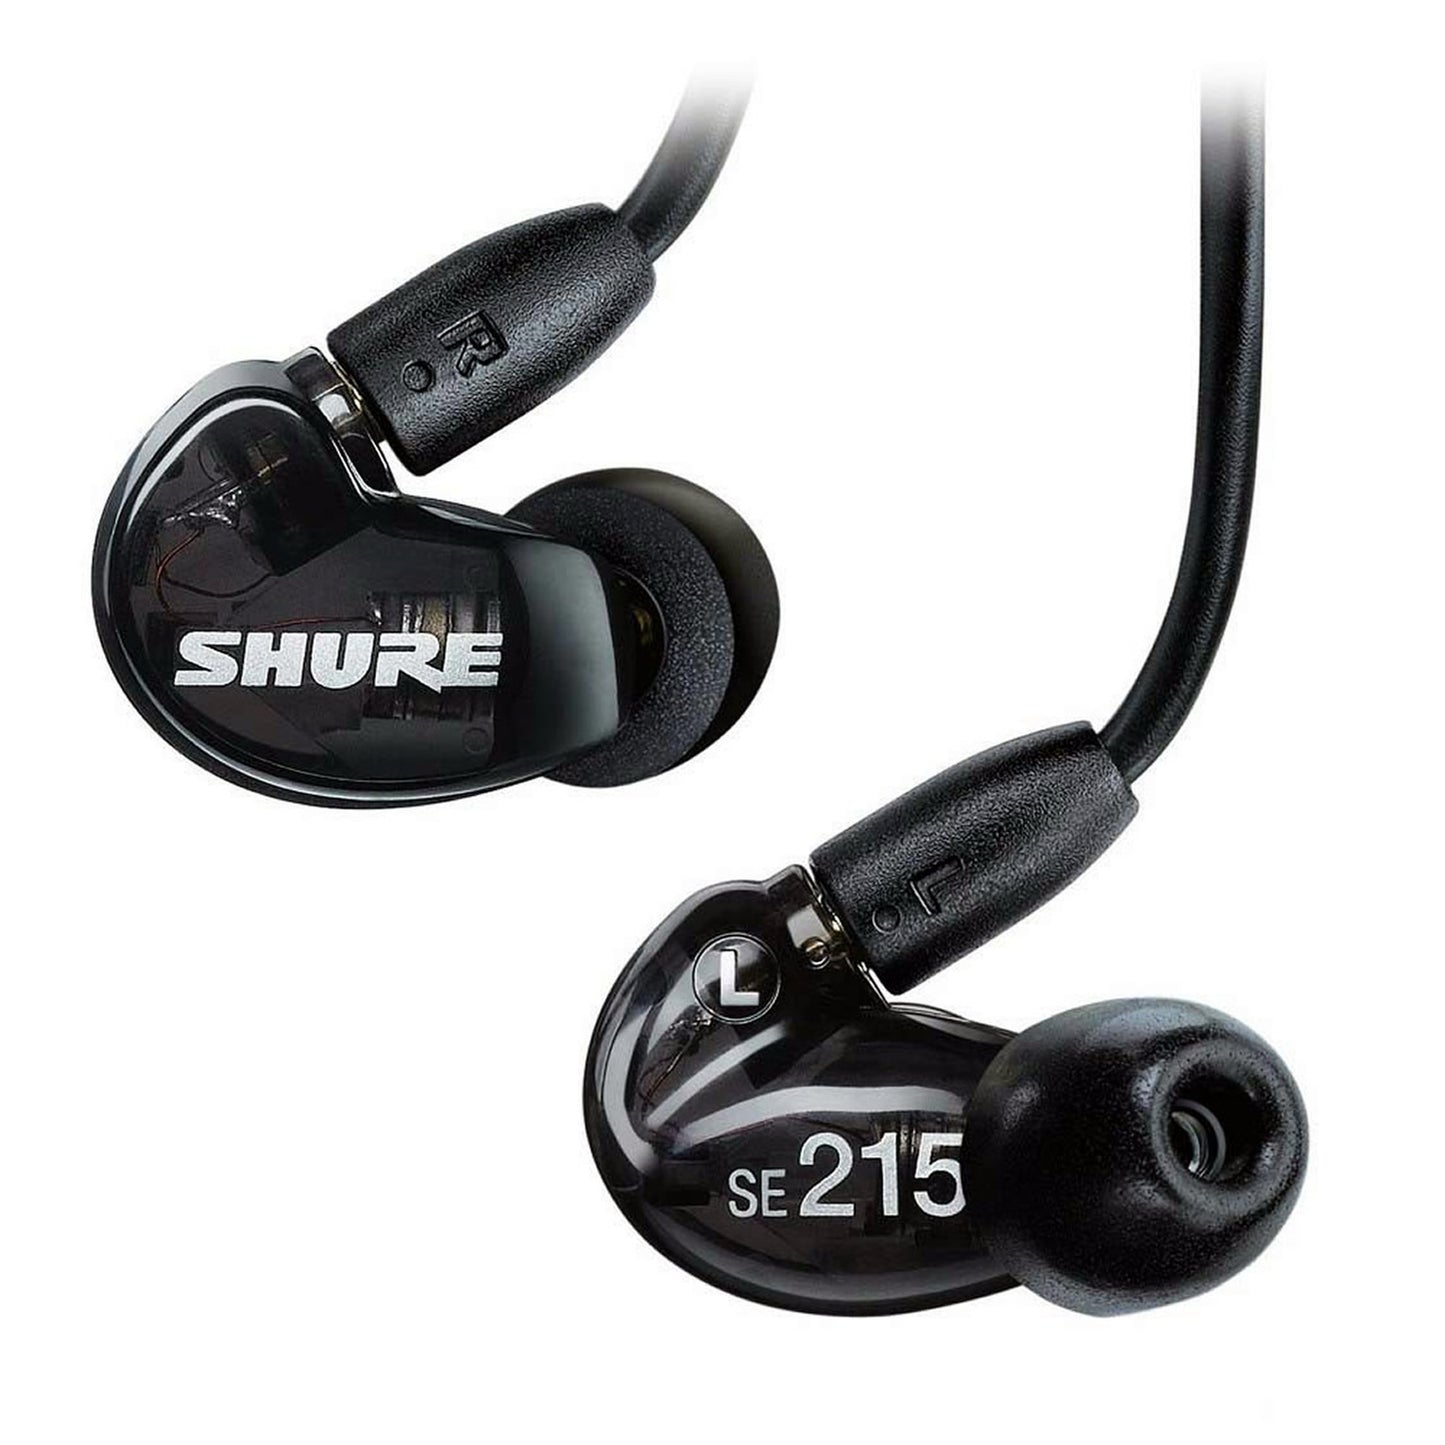 Shure SE215 Professional Sound Isolating Earphones